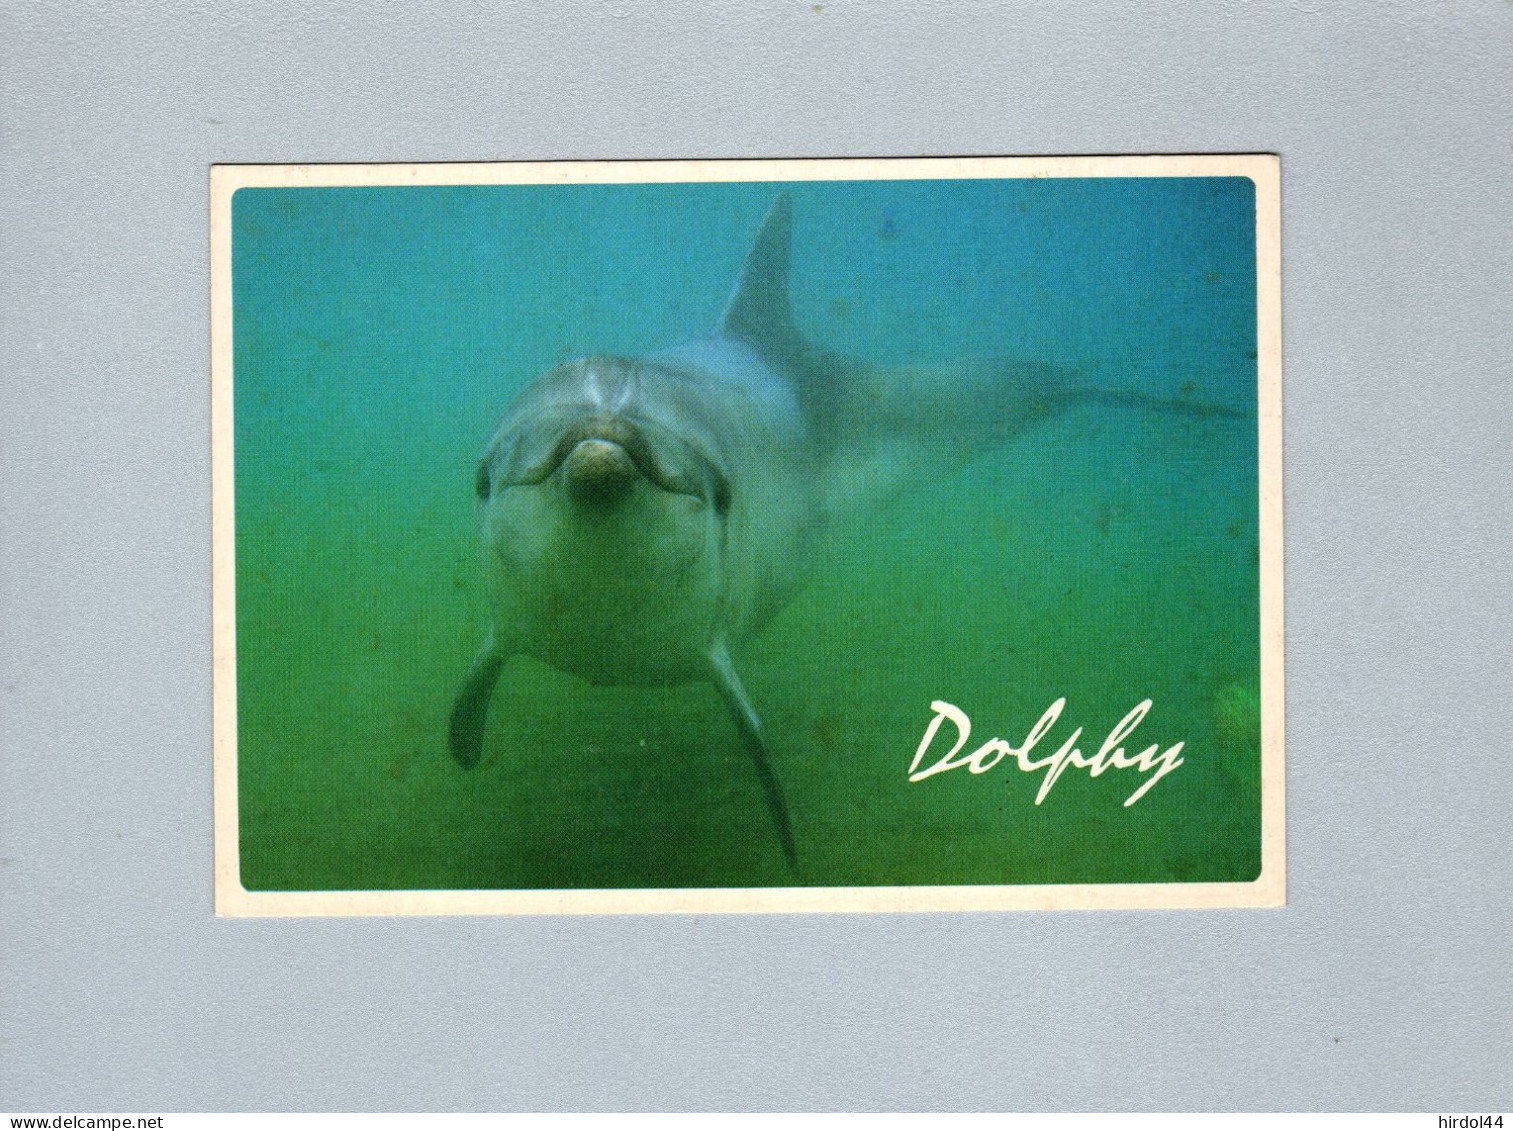 Dauphins - Delphine